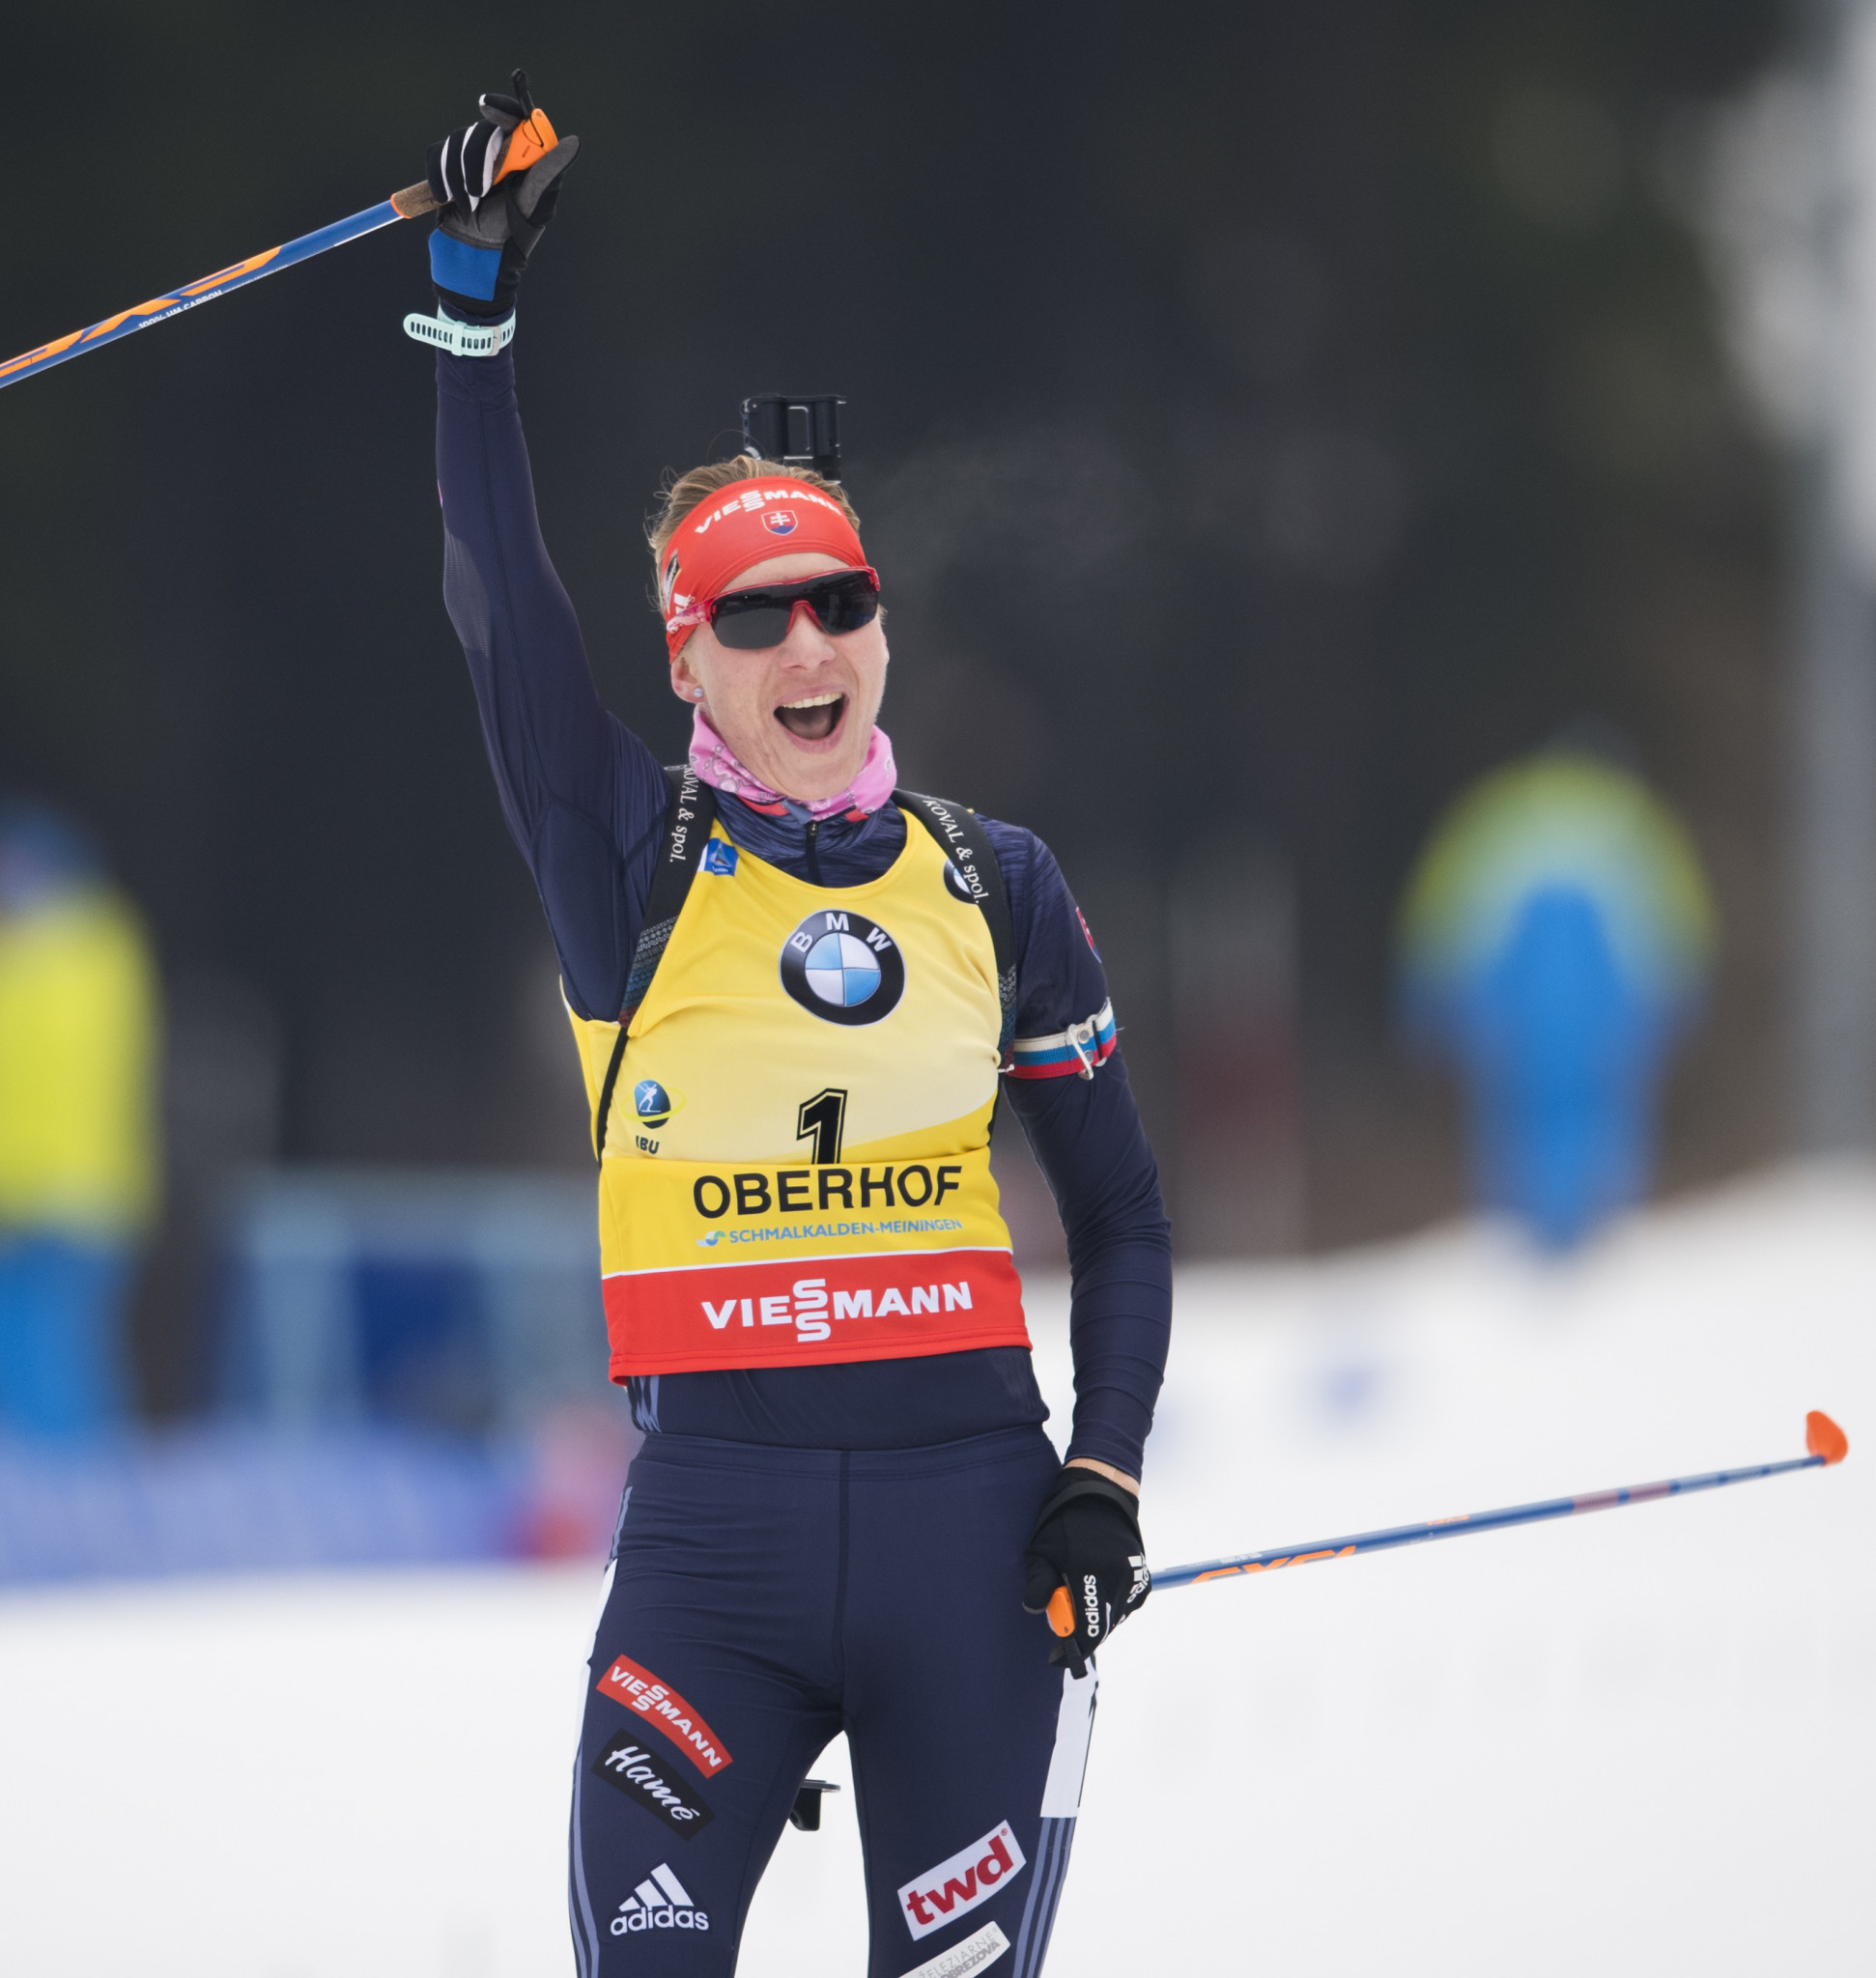 Kuzmina has now won both women's titles in Oberhof ©Getty Images